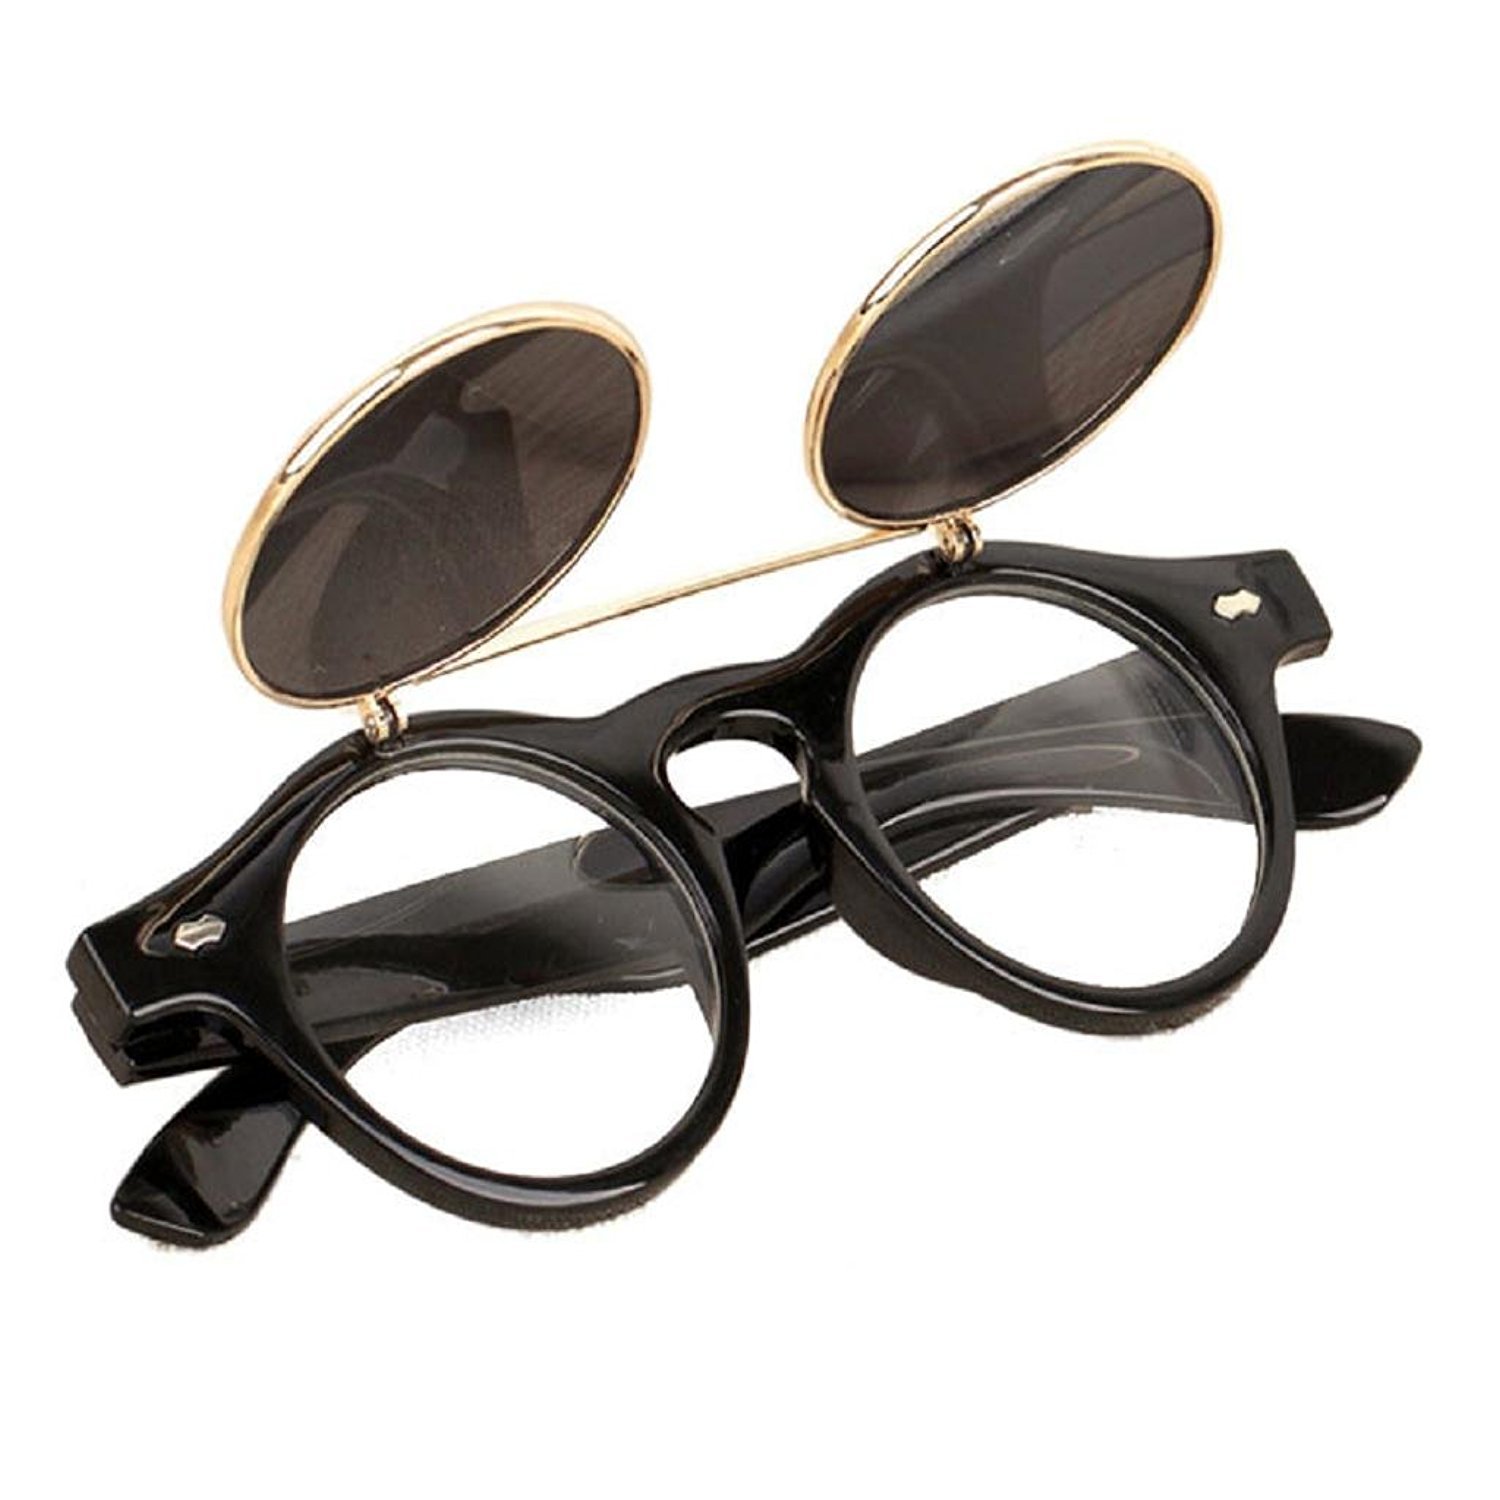 Очки пятерки. Очки Steampunk Retro. Очки Vintage Steampunk Glasses. Очки Flip up. Rodenstock очки ретро.